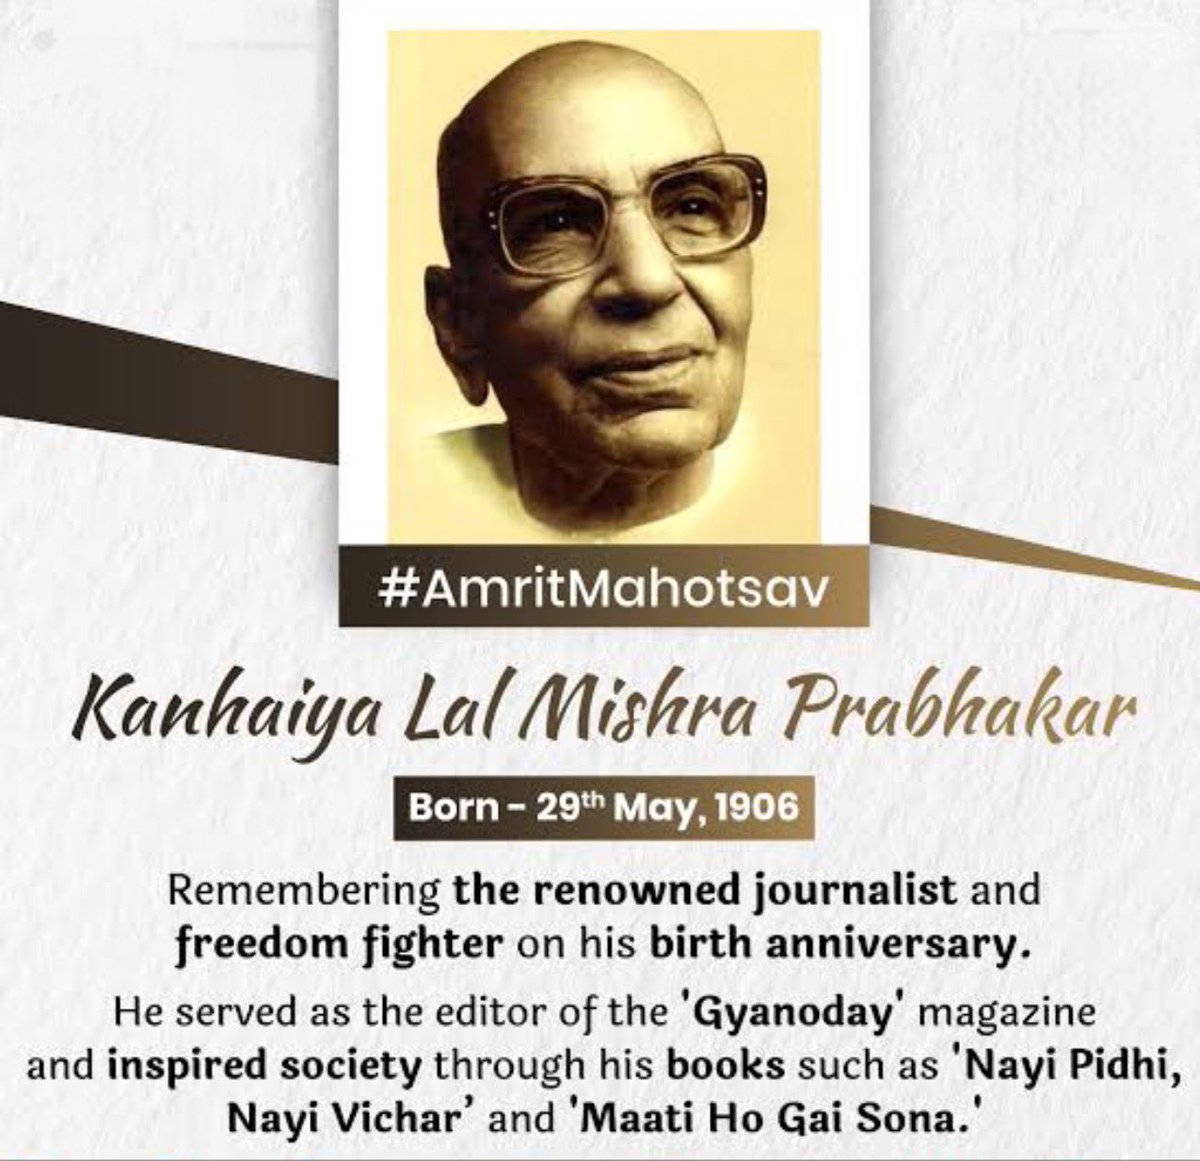 Kanhaiyalal Mishra Prabhakar a well-known Hindi essayist, who has written many essays related to political and social life. Kanhaiyalal has also edited the magazine ‘Gyanodaya’. Humble tribute on his birth anniversary #SwatiTandon101 #KanhaiyalalMishraPrabhakar